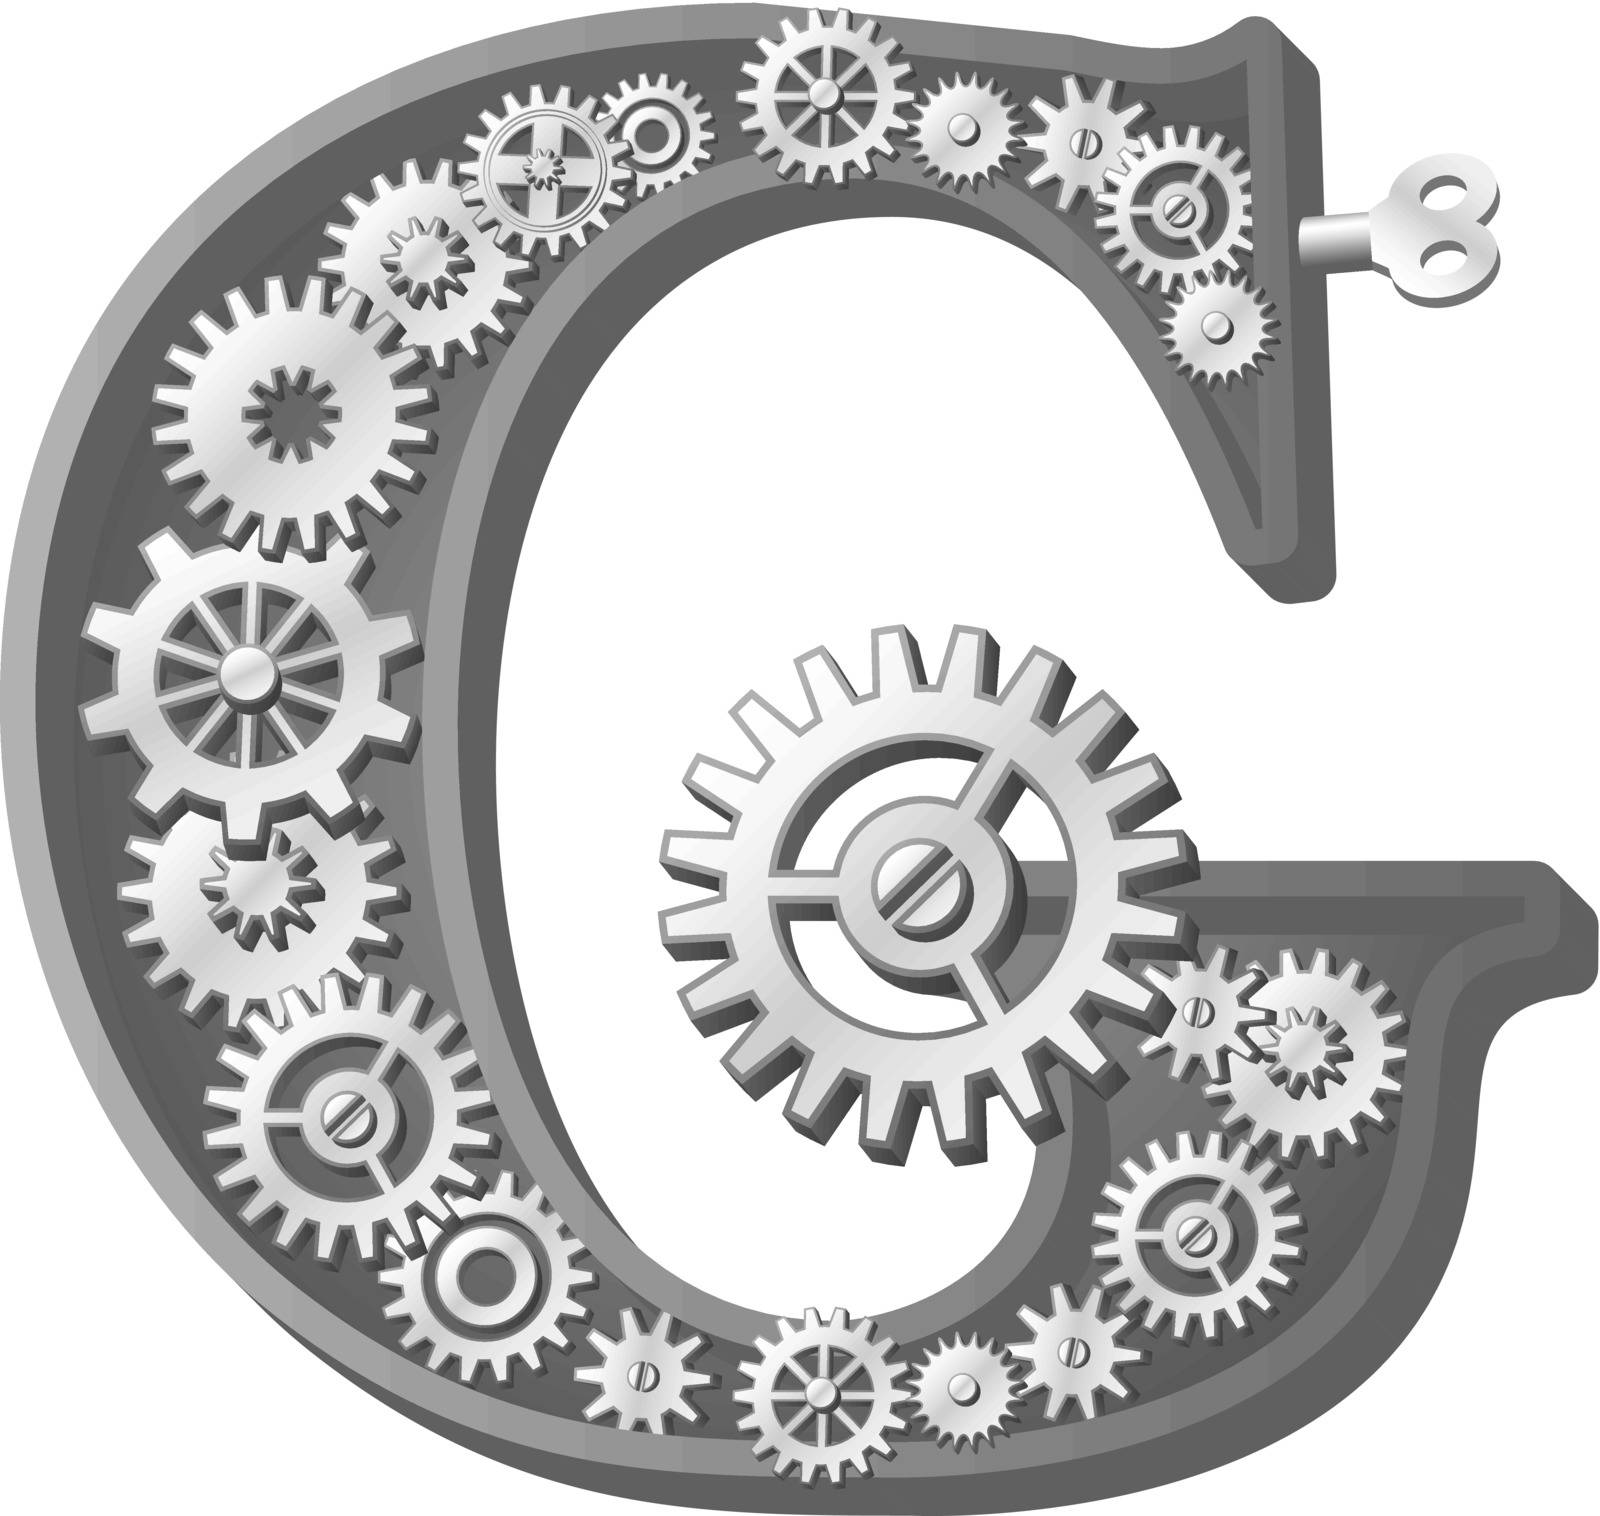 Mechanical alphabet made from gears. Letter g